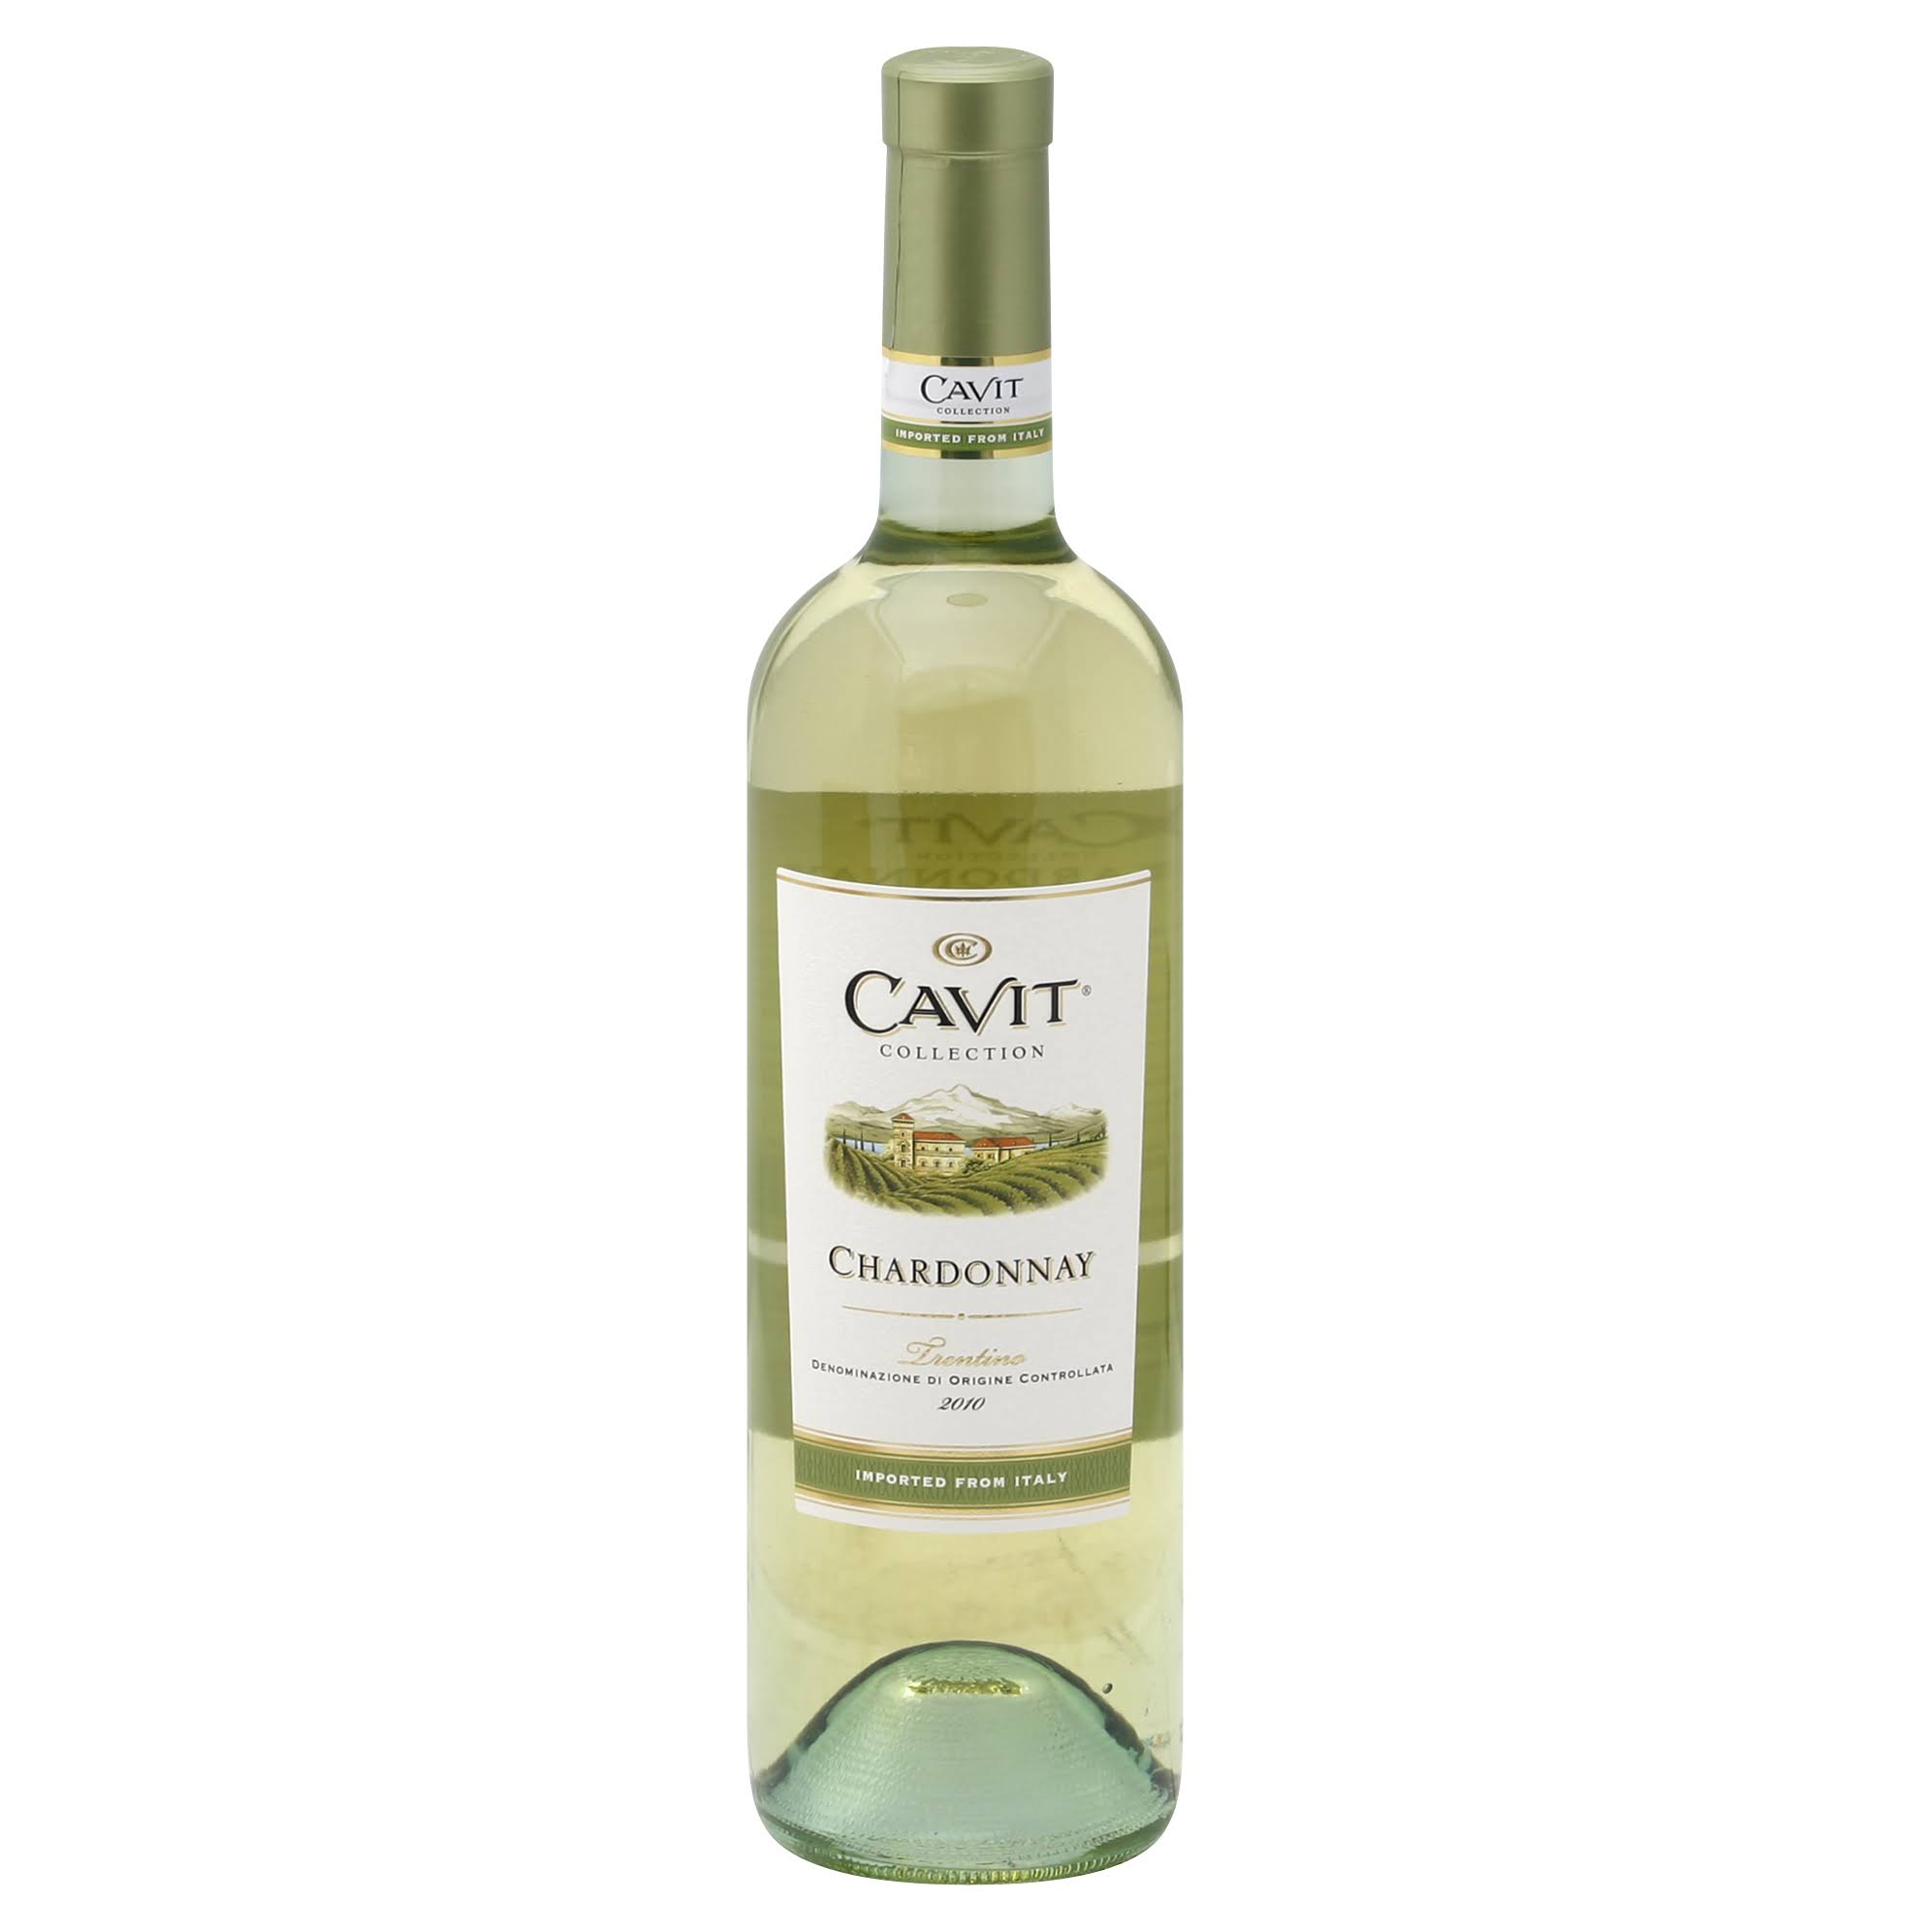 Cavit Collection Chardonnay Trentino, 2010